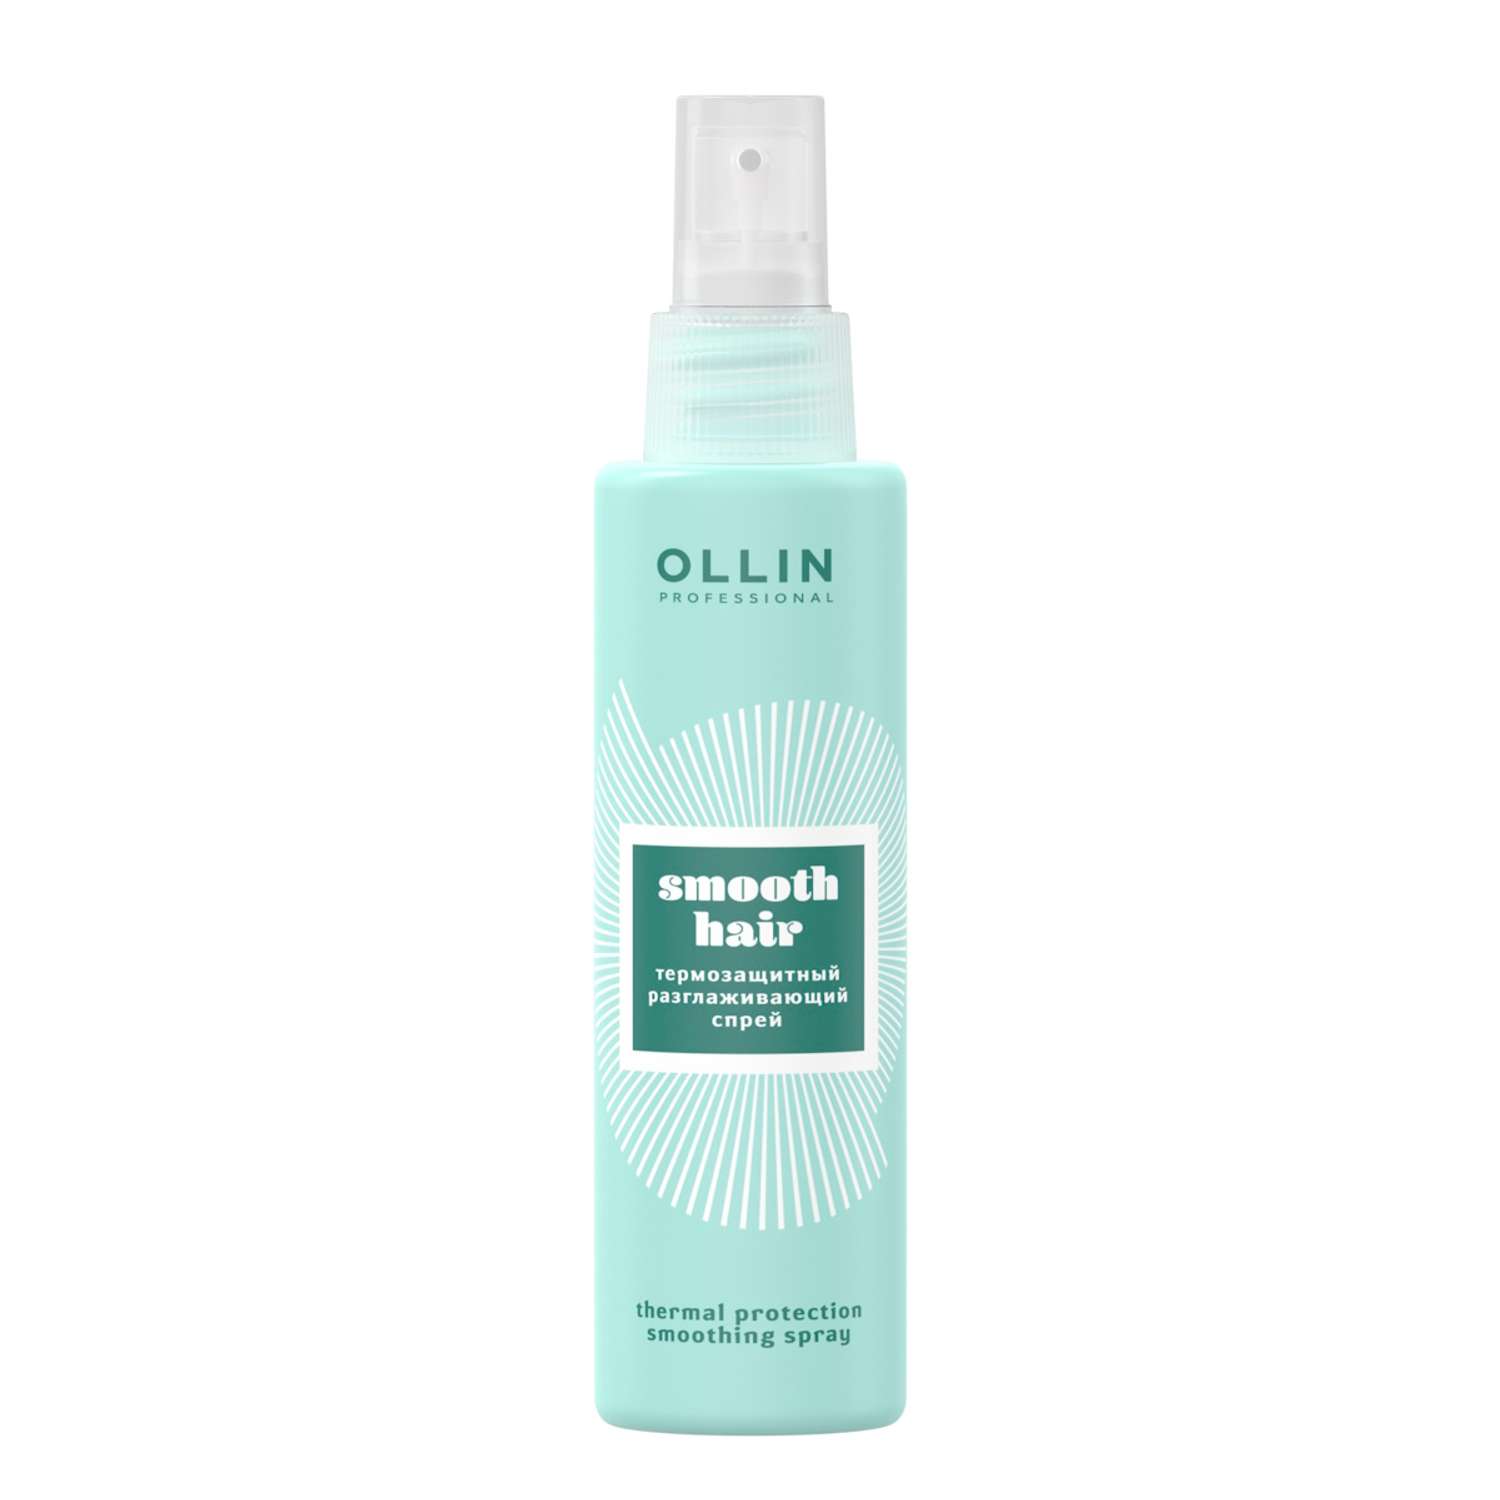 Спрей Ollin SMOOTH HAIR для термозащиты волос разглаживающий 150 мл - фото 1